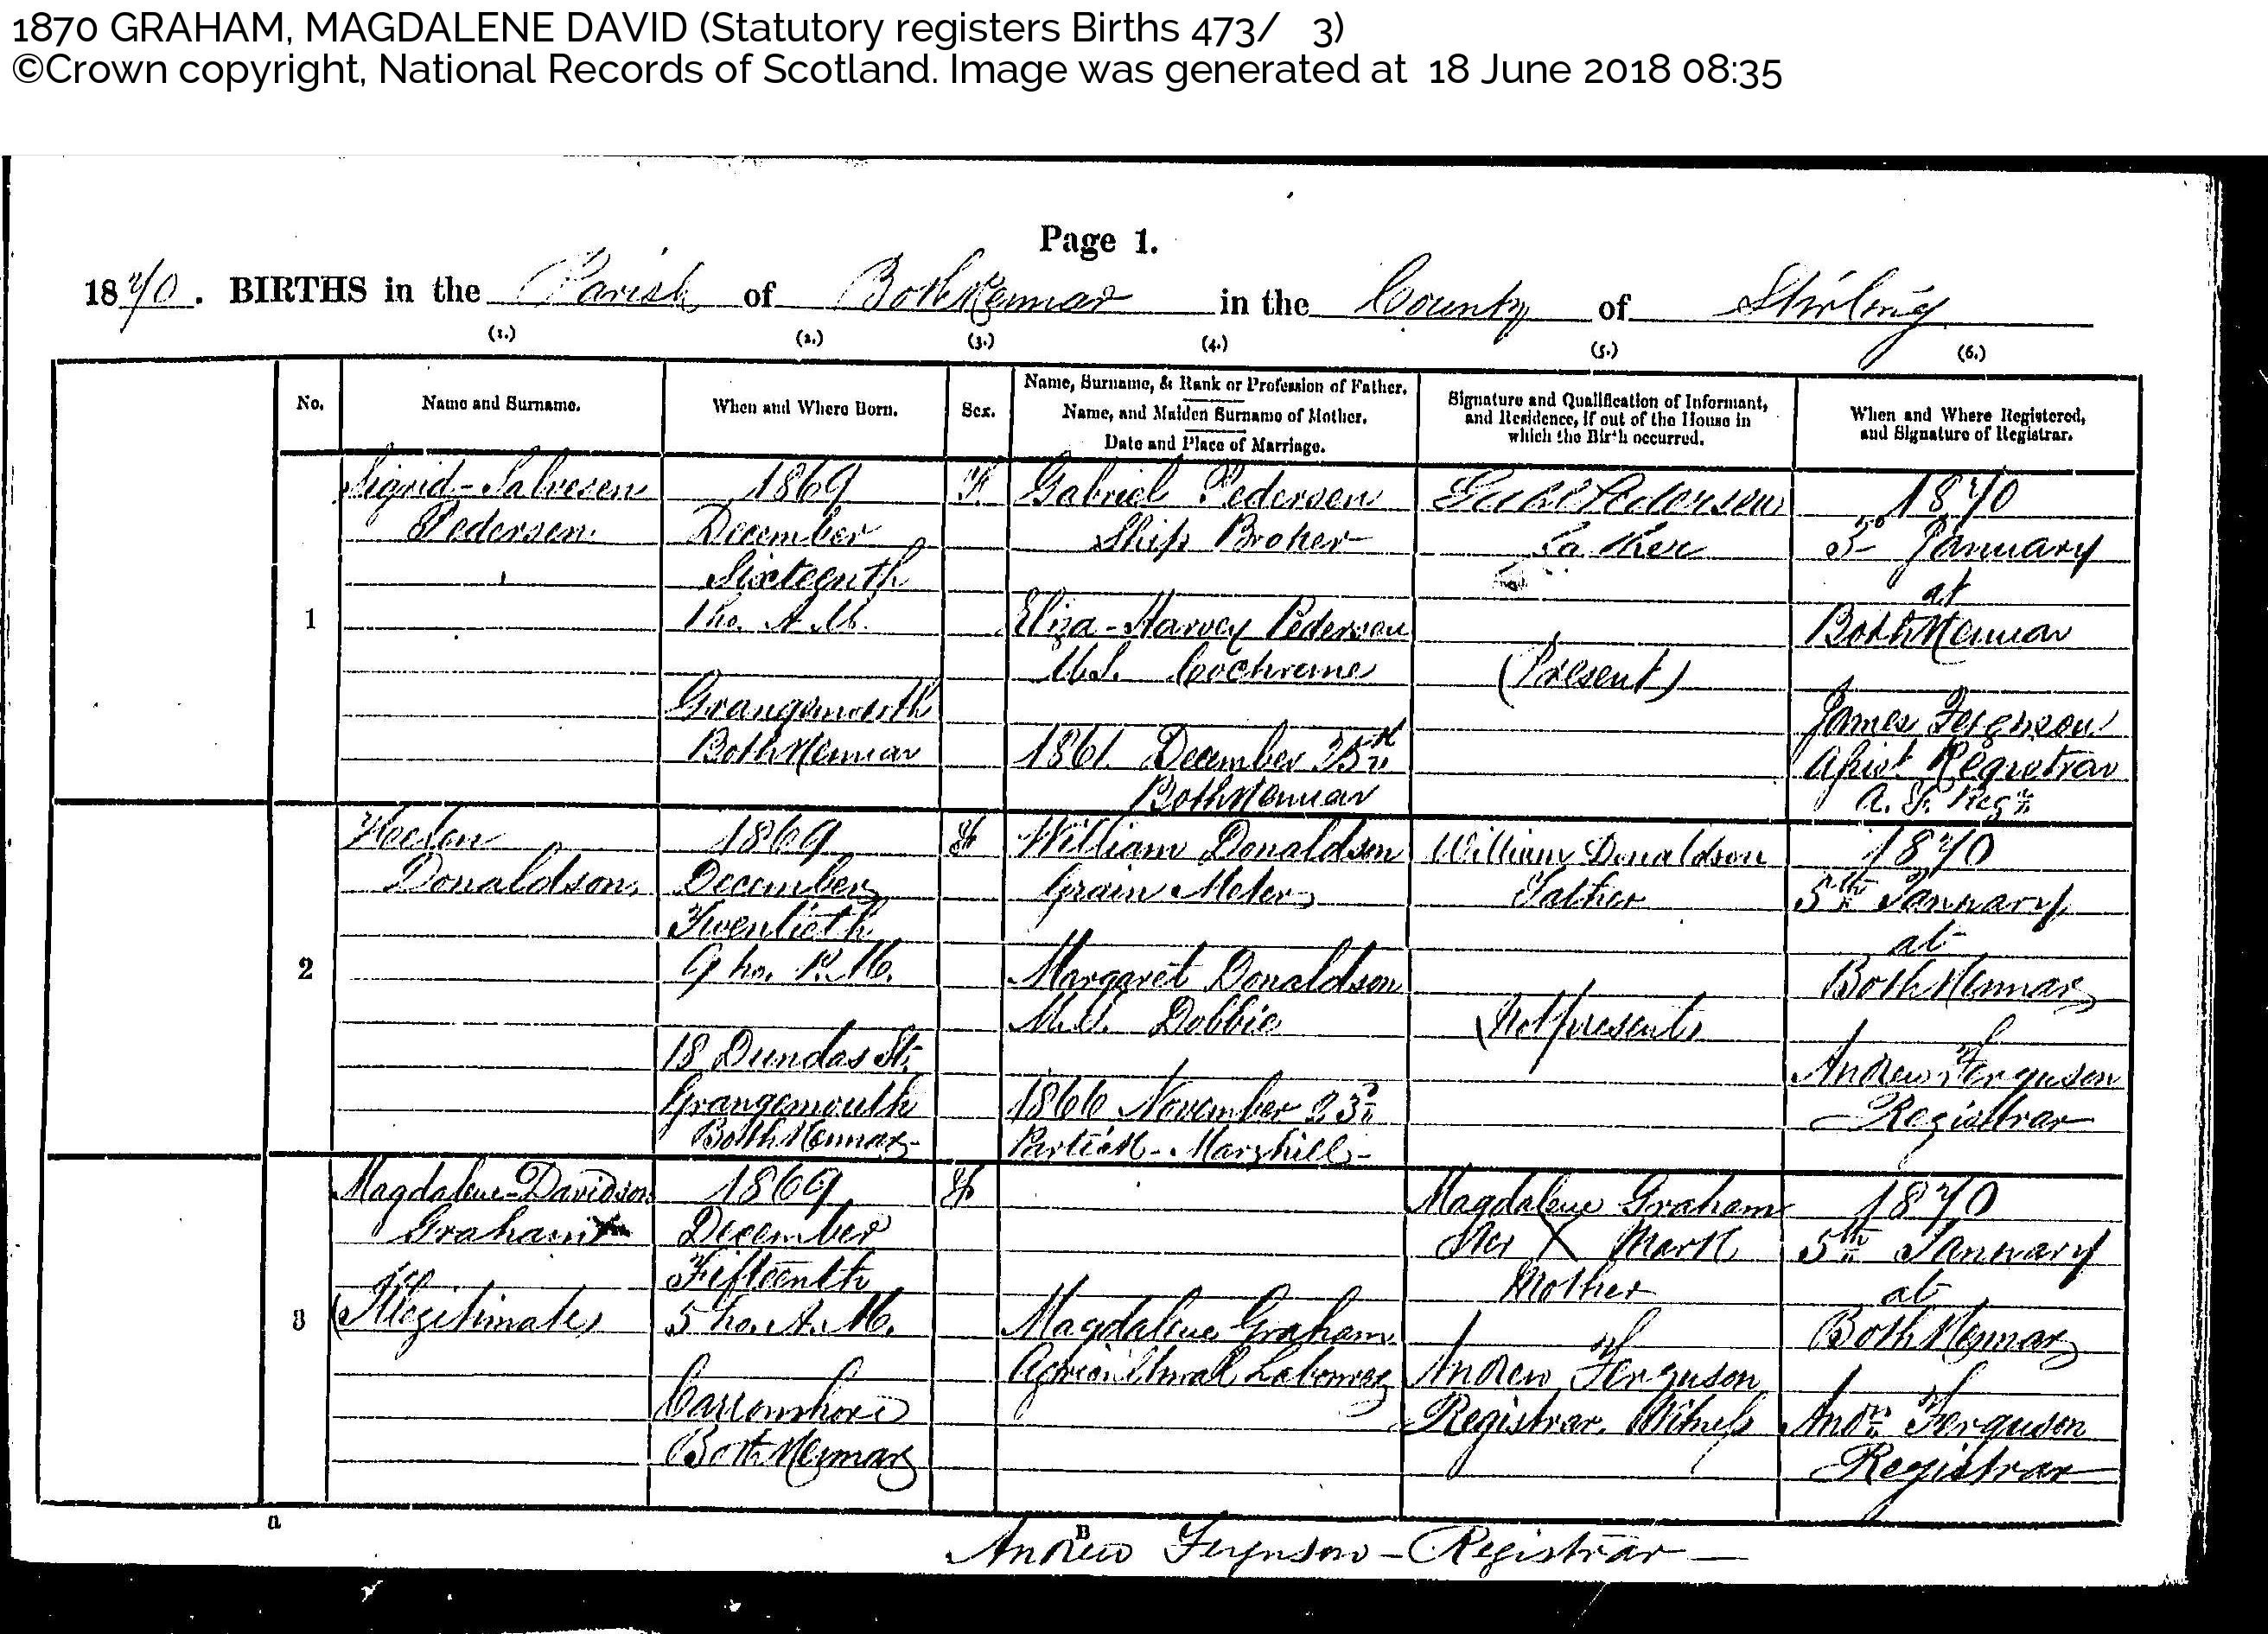 MagdaleneDavidsonGraham_B1869 Carronshore, 1869, Linked To: <a href='profiles/i8493.html' >Magdalene Graham</a>